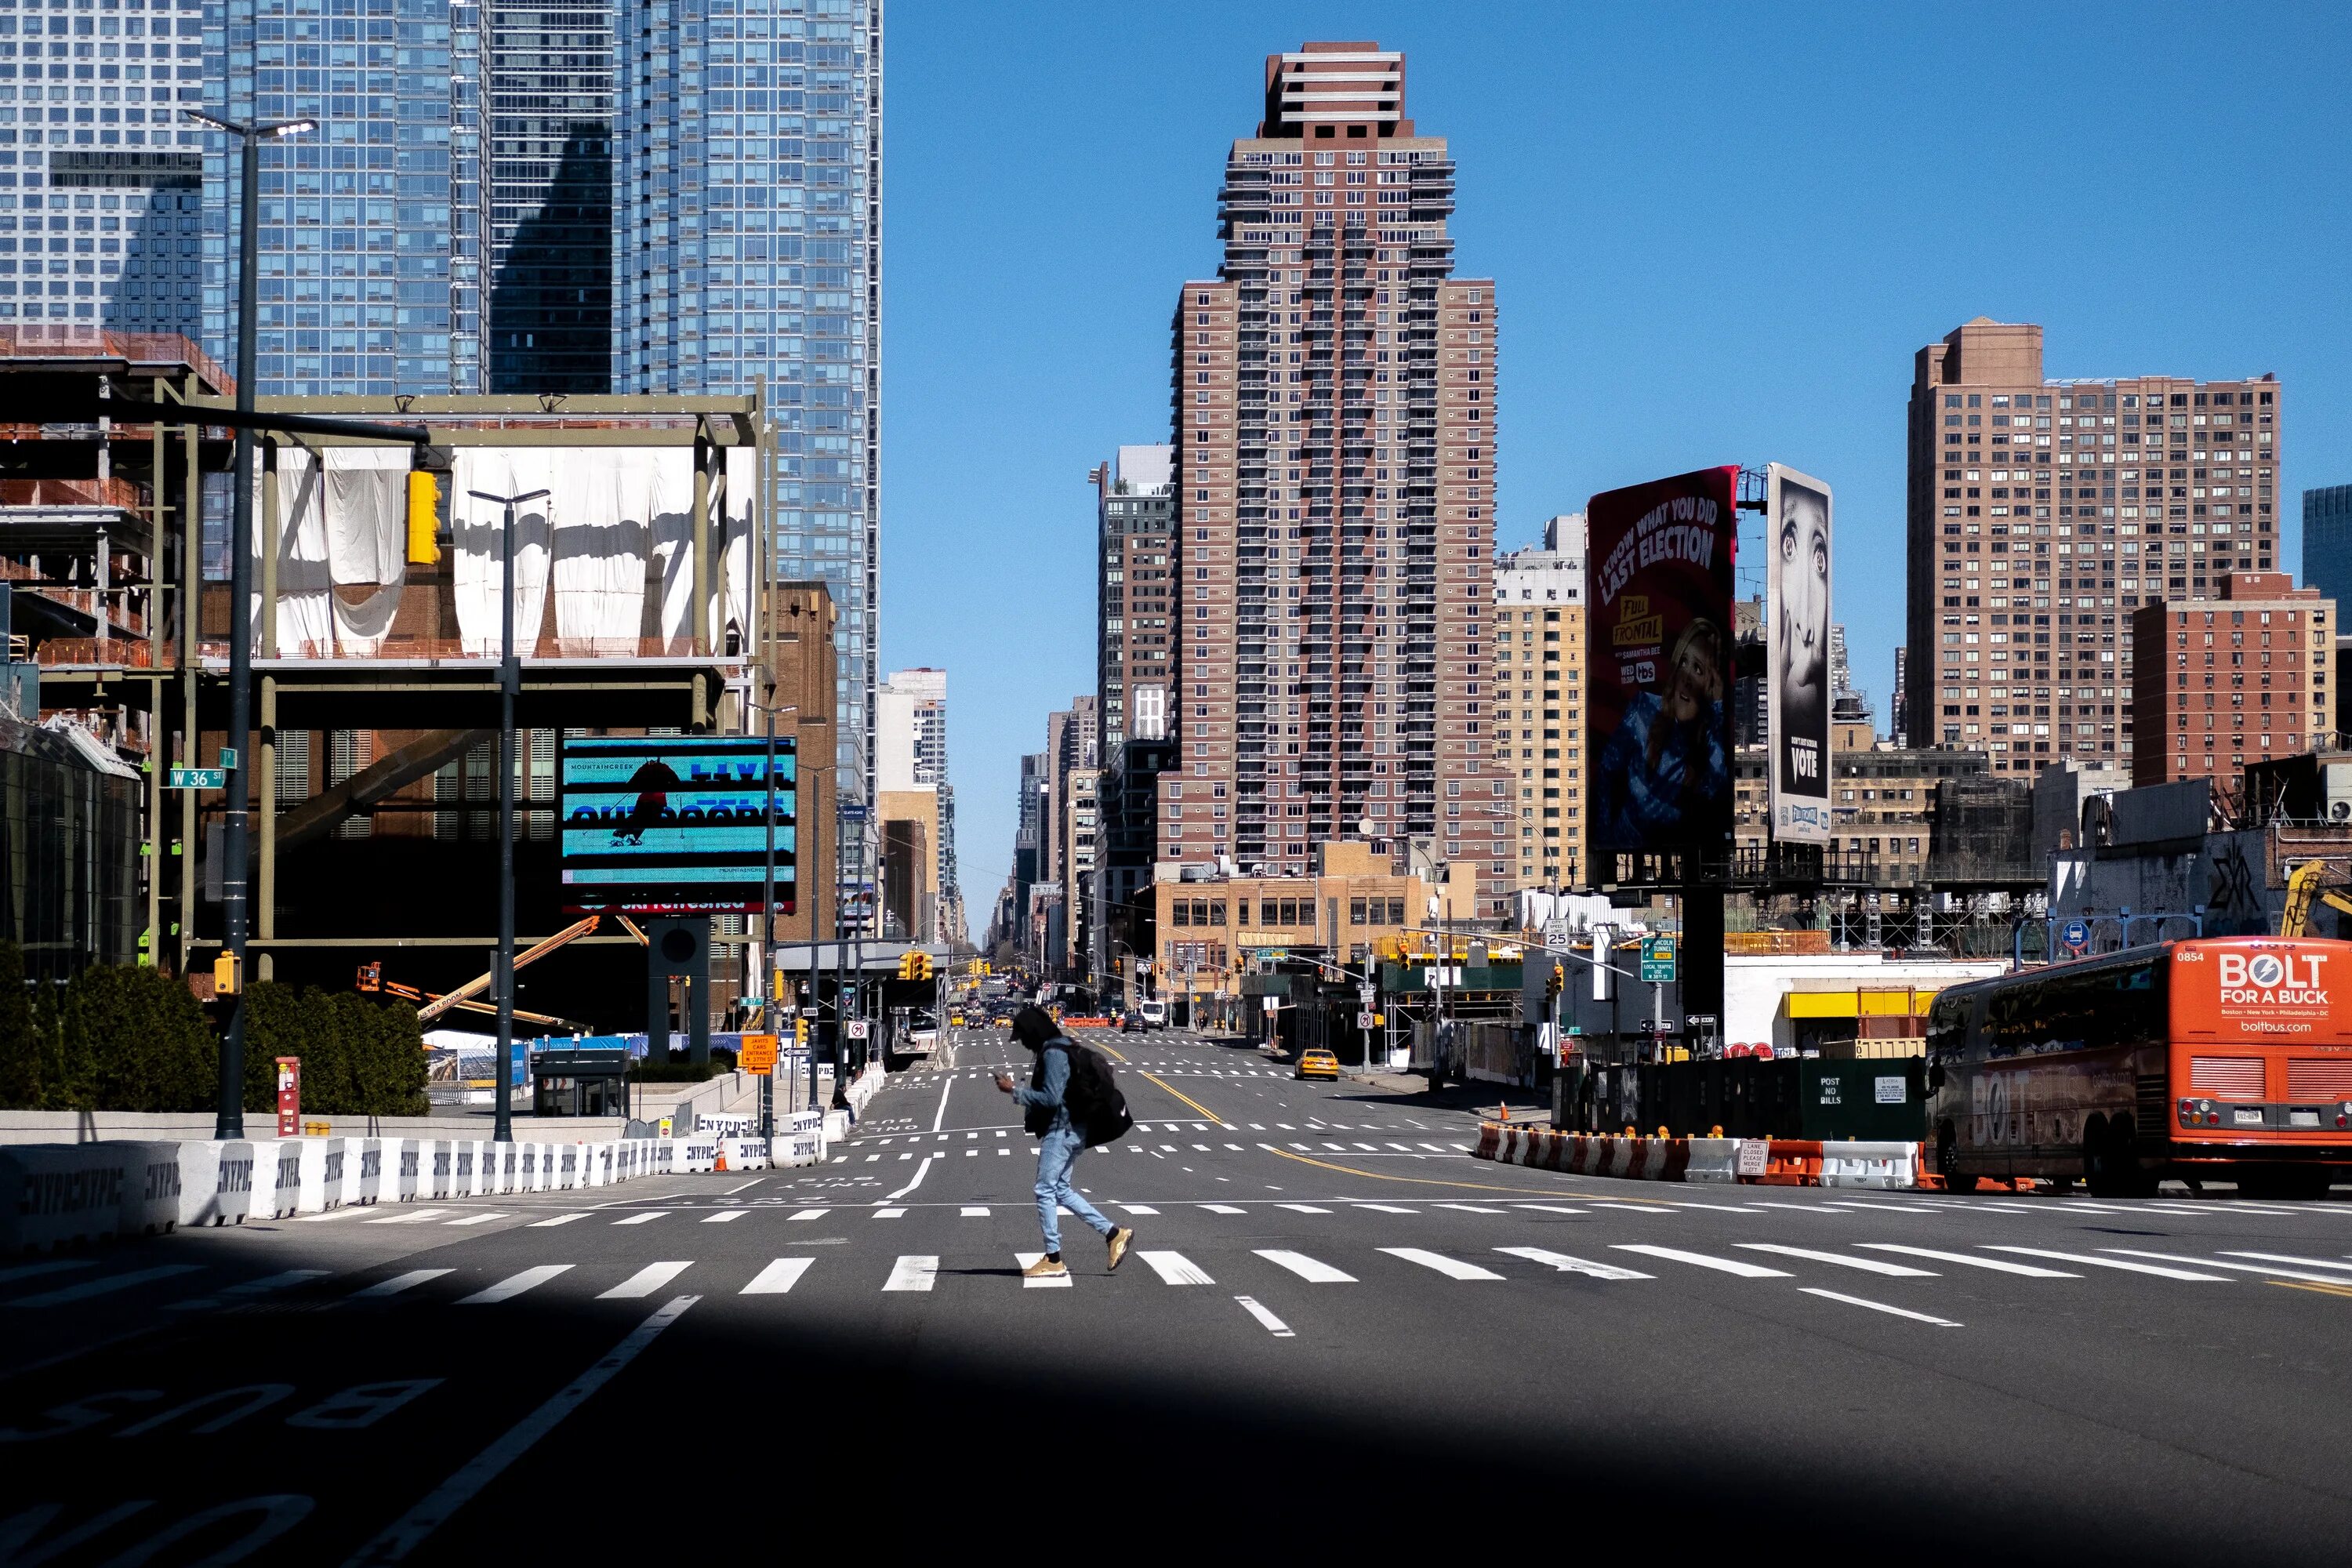 New work city. Нью-Йорк. Нью-Йорк Сити Манхэттен улицы. Район Манхэттен в Нью-Йорке. Нью йоркер город в США.